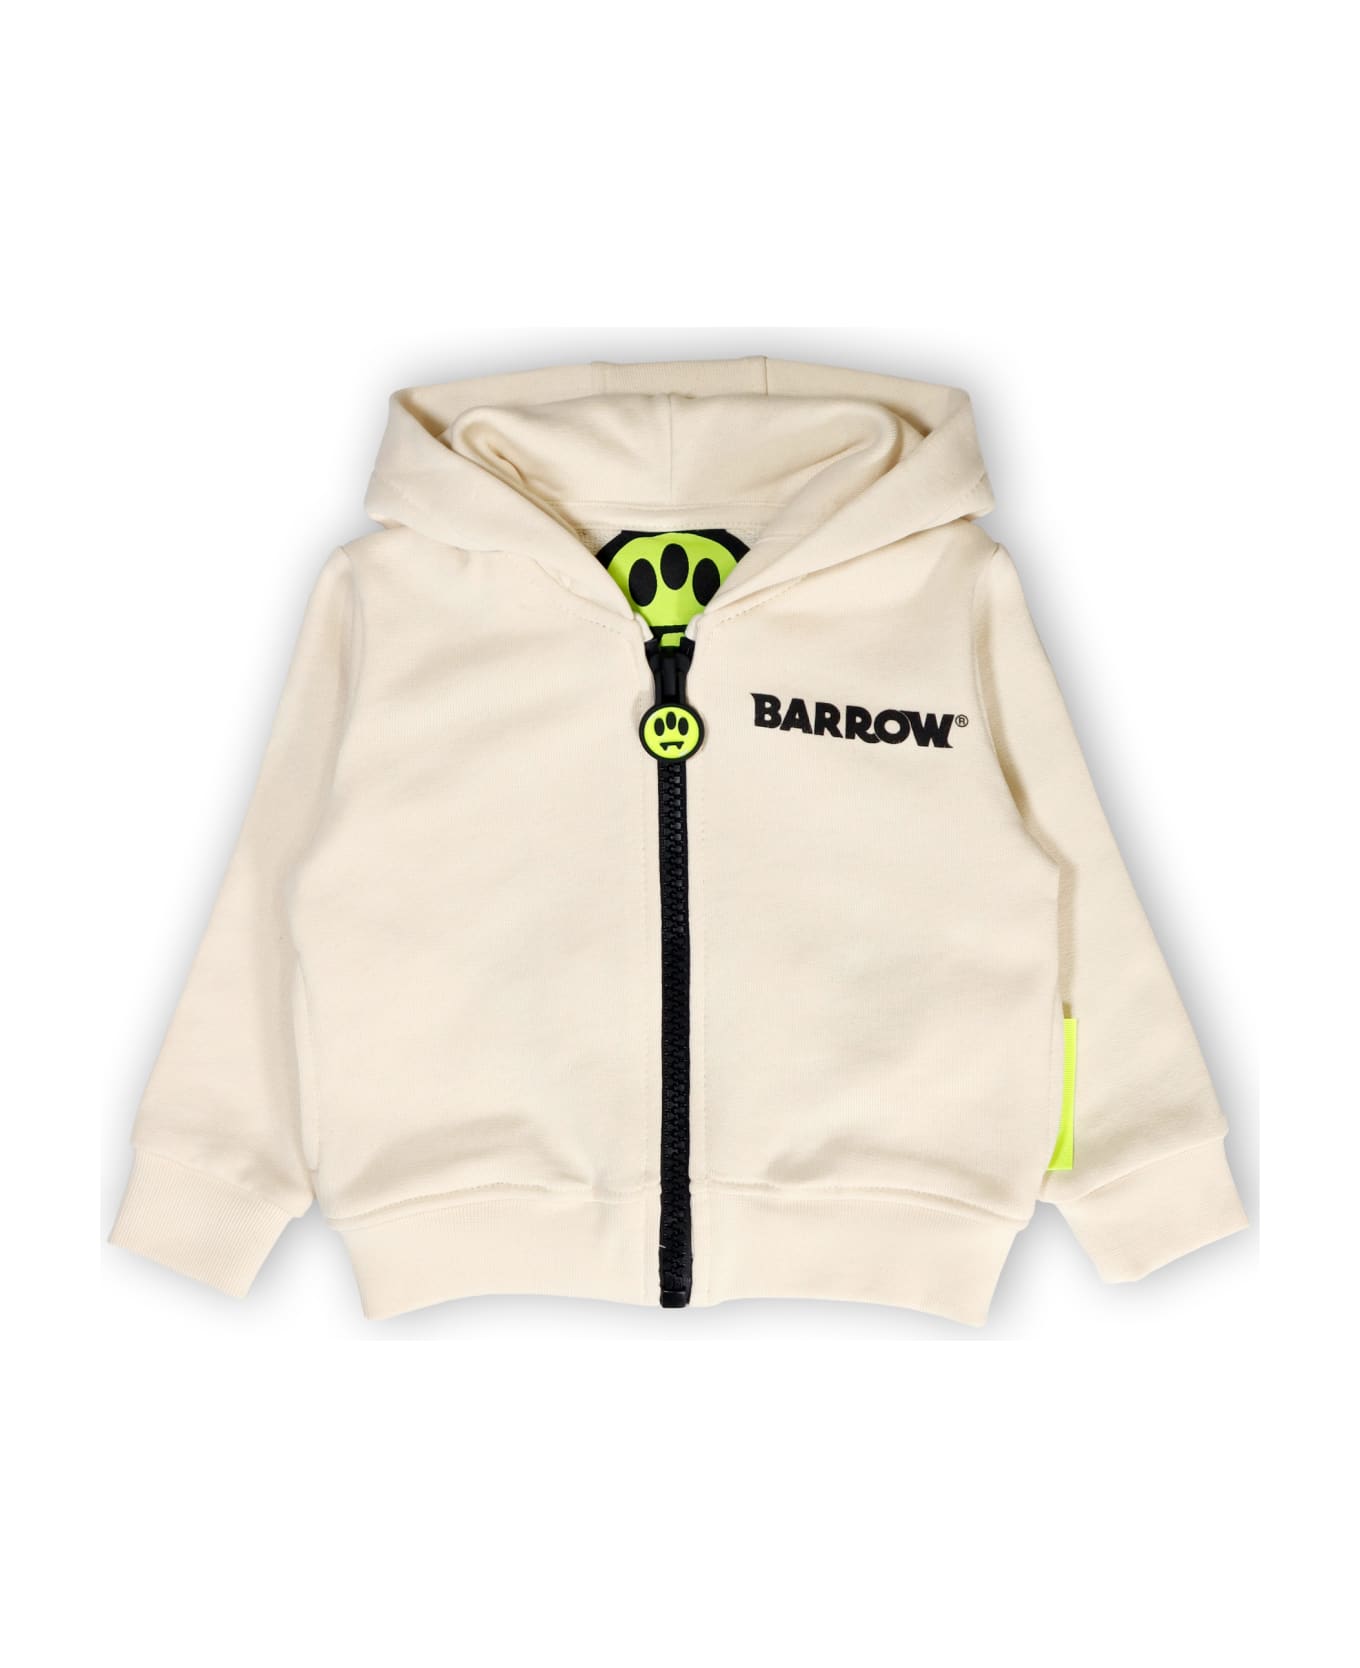 Barrow Sweatshirt With Zip And Hood - Cream